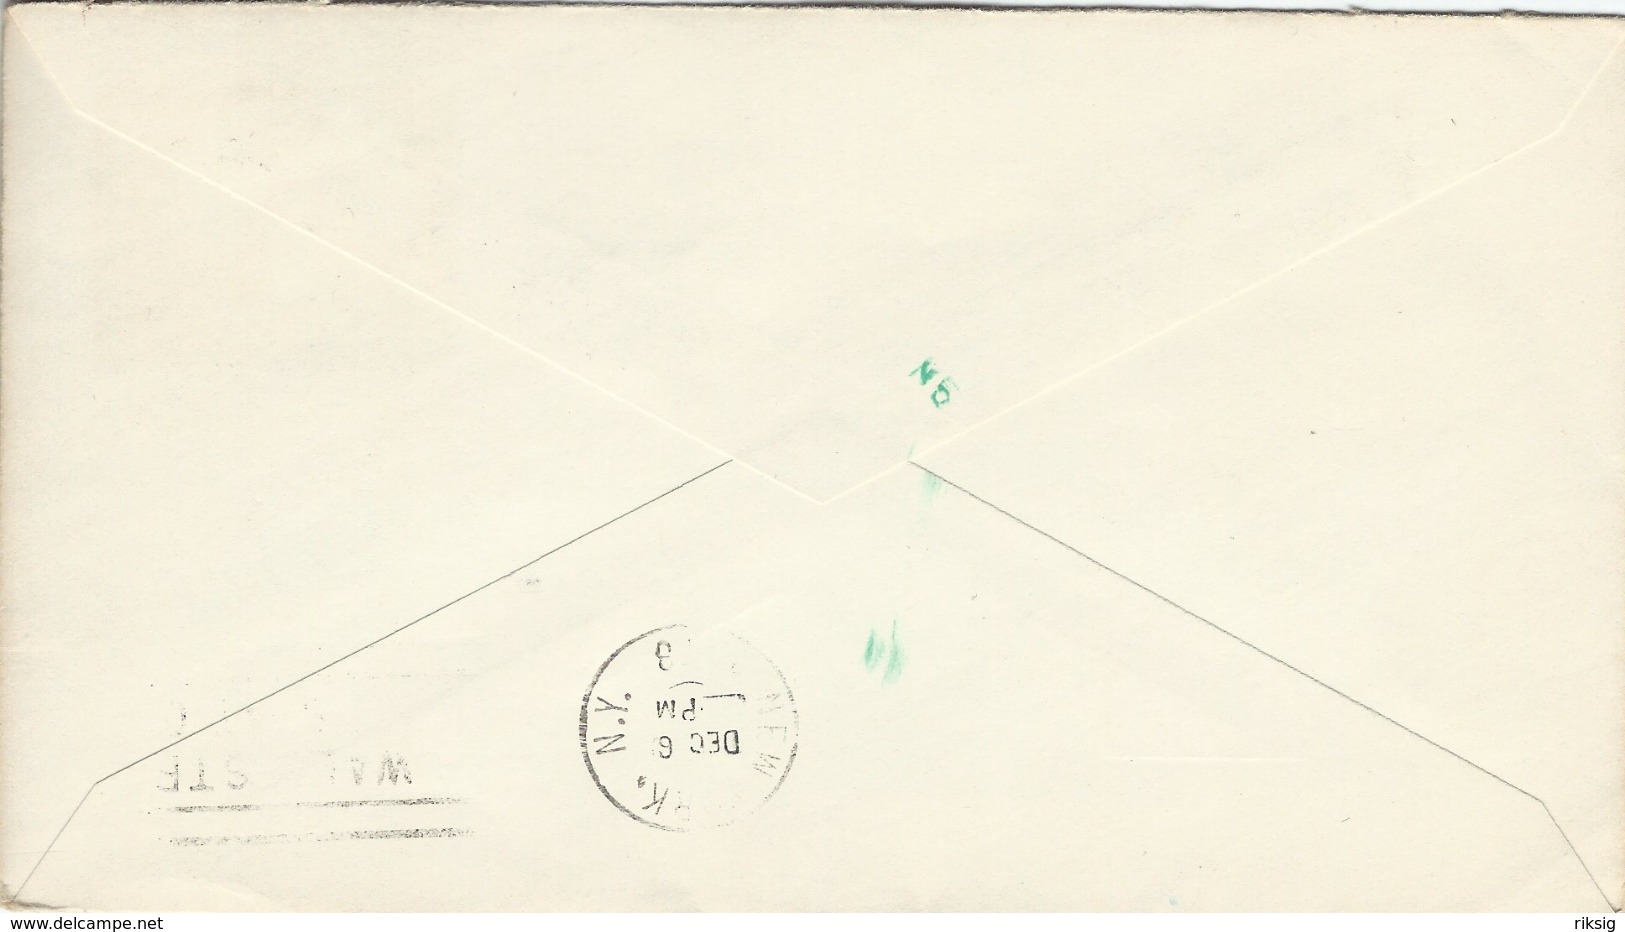 Revalued Stationery. Used 1978.    H-985 - 1961-80